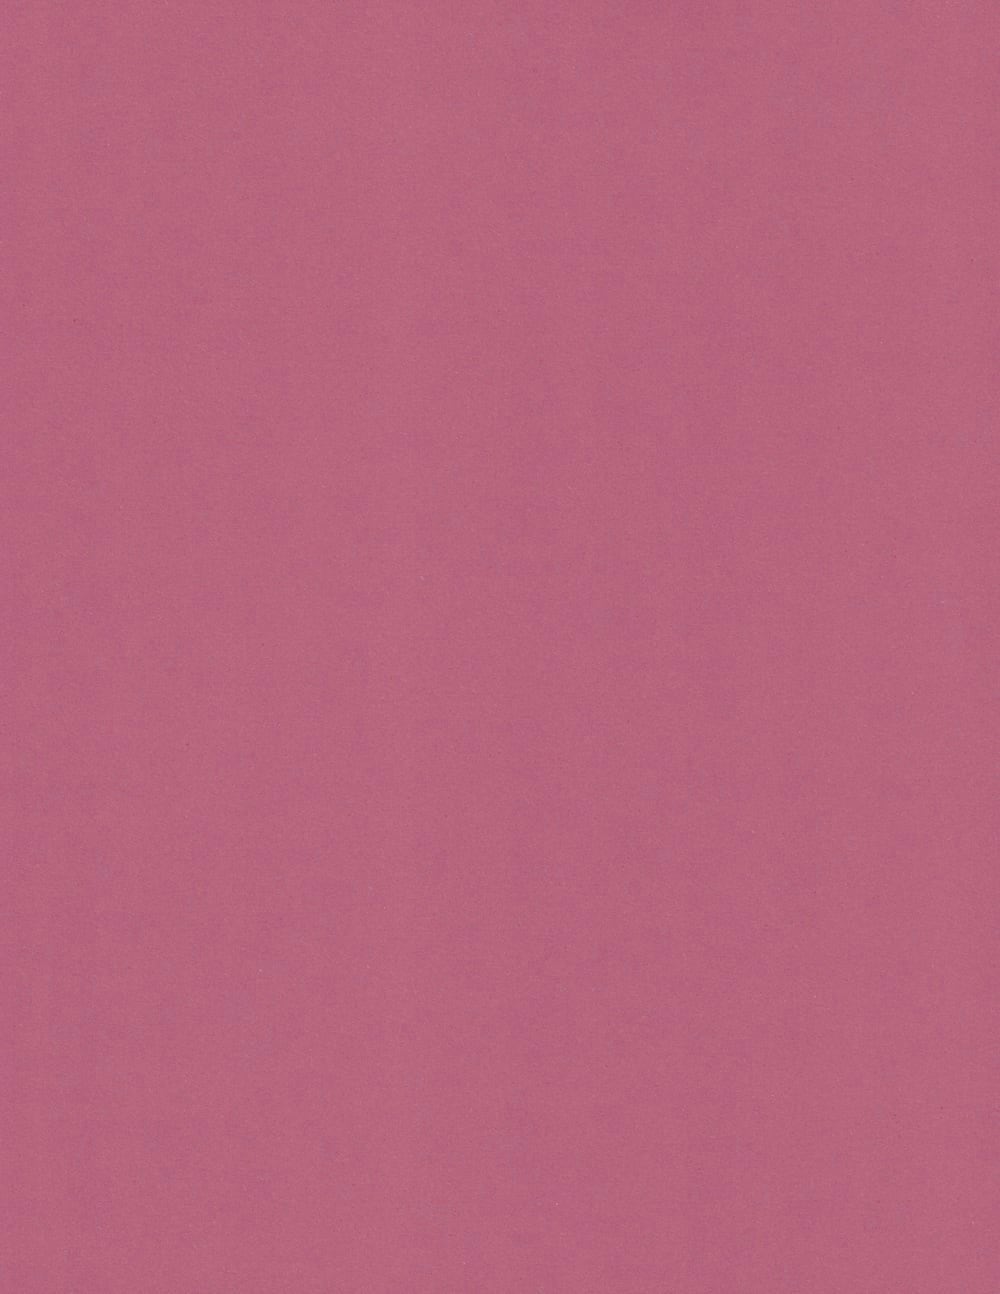 Malva Dark Pink | Woodstock Cardstock Paper Cover | 105 lb | 285 GSM / 8.5 x 11 / 25 Sheets